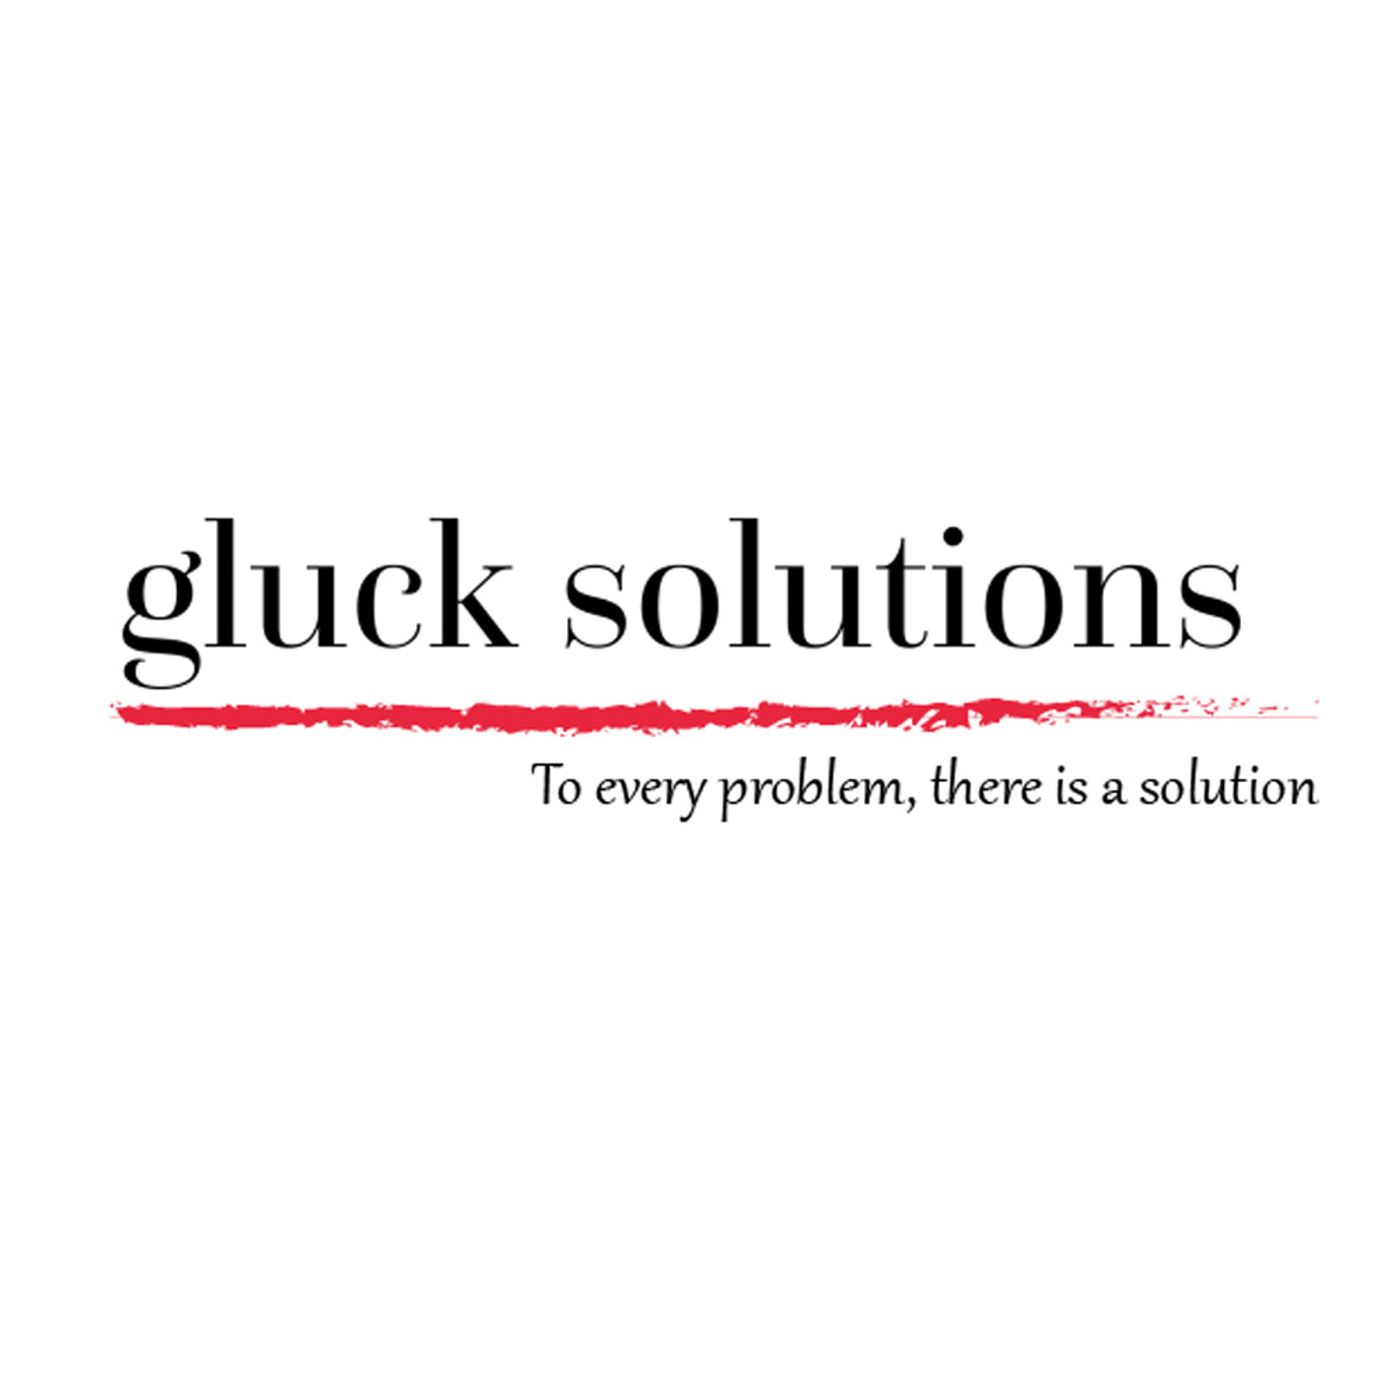 Gluck Solutions 7-22-18